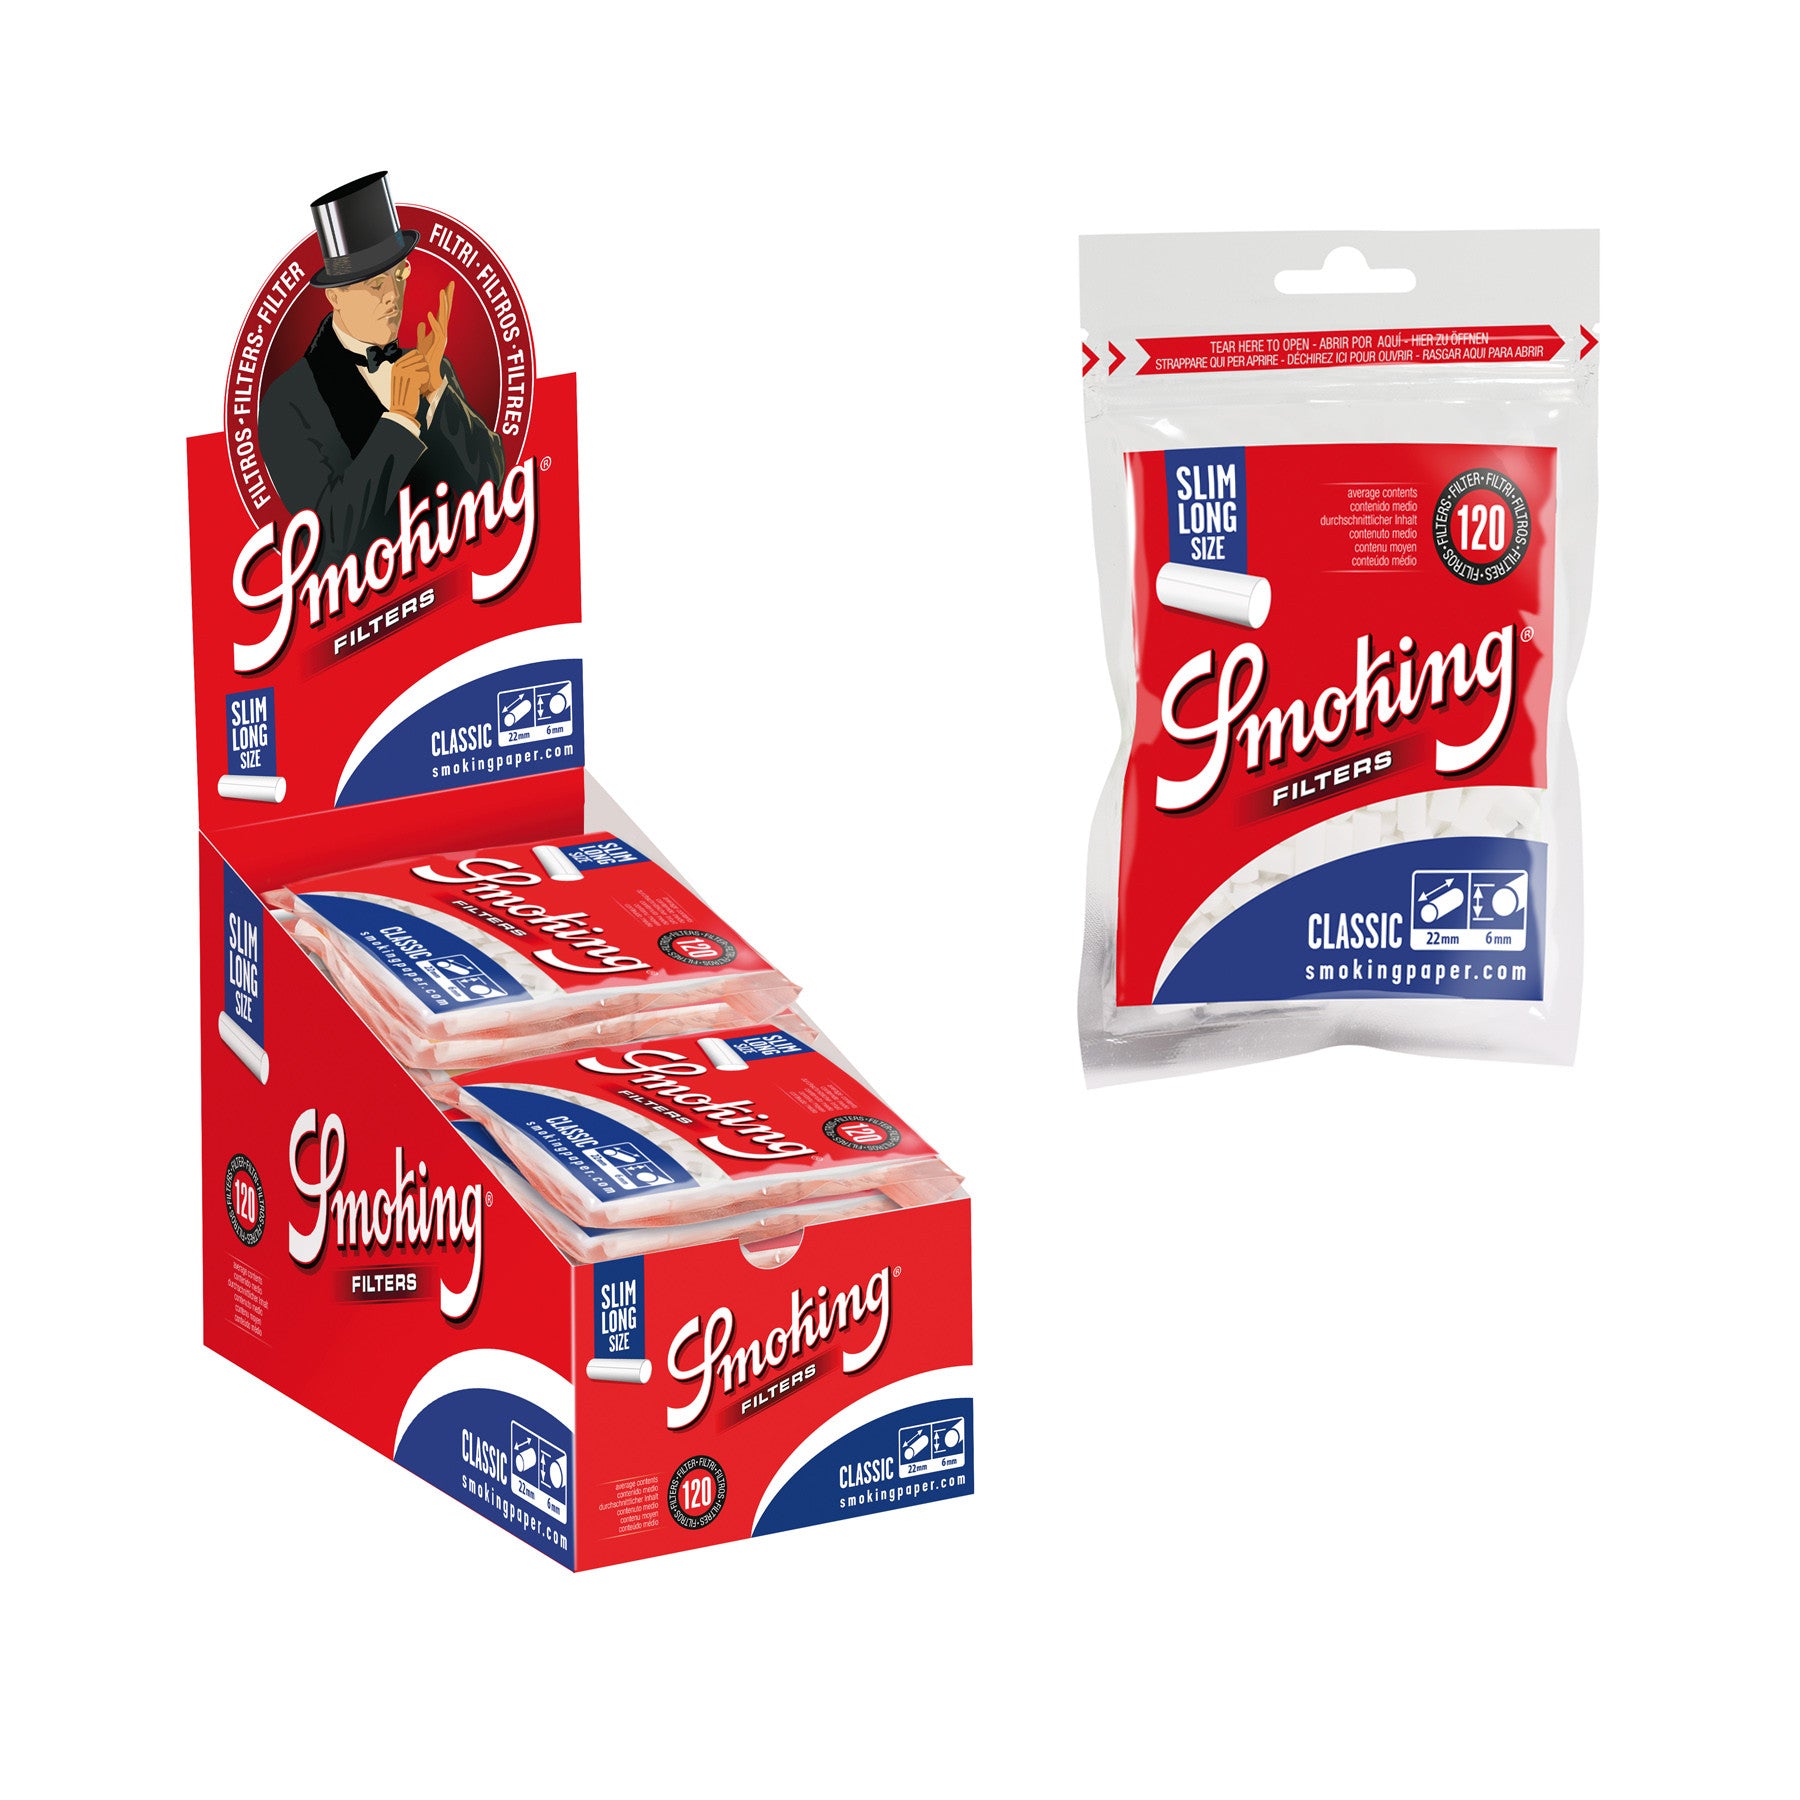 Smoking Classic Slim Size Long Filters Box & Bag